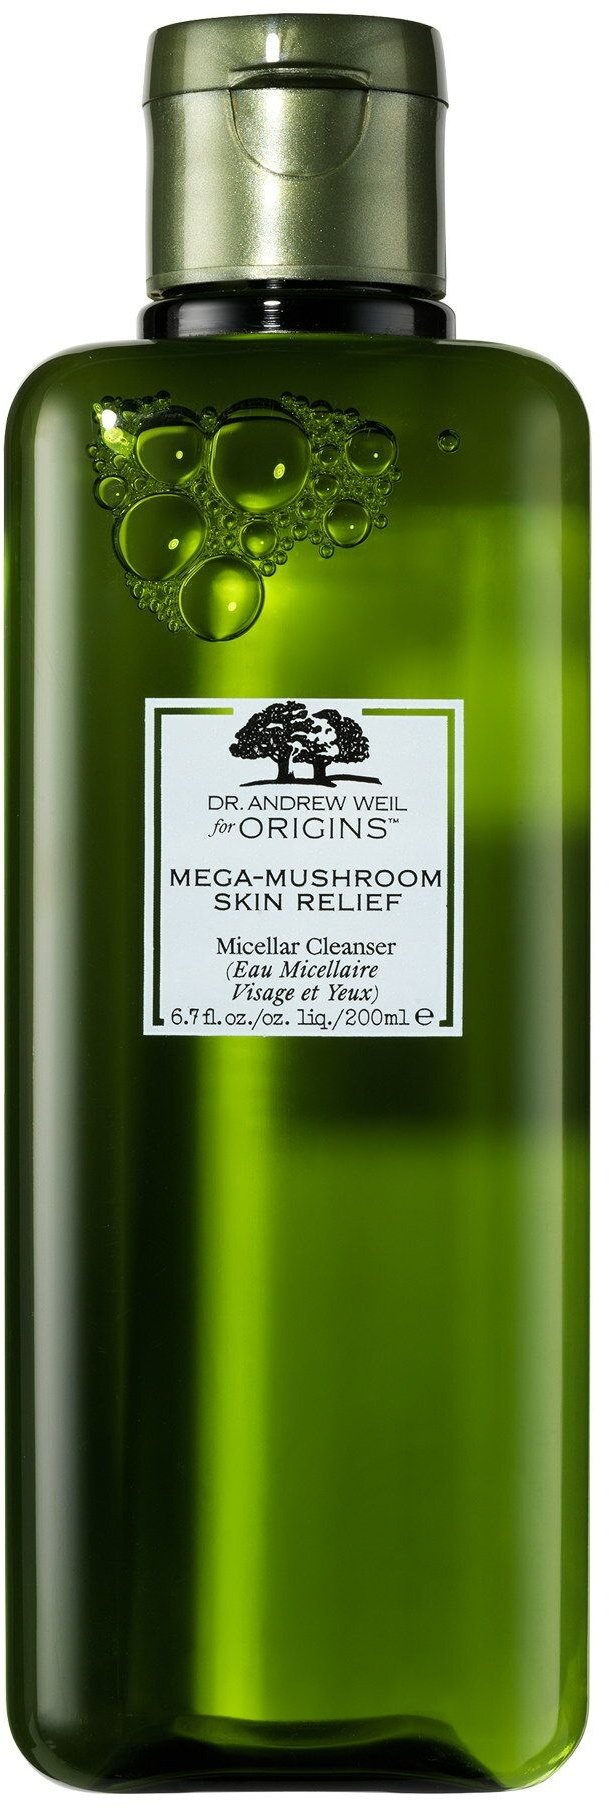 DR. ANDREW WEIL FOR ORIGINSTM Mega-Mushroom Skin Relief Micellar Cleanser 200 ml produit(s) démaquillant(s)